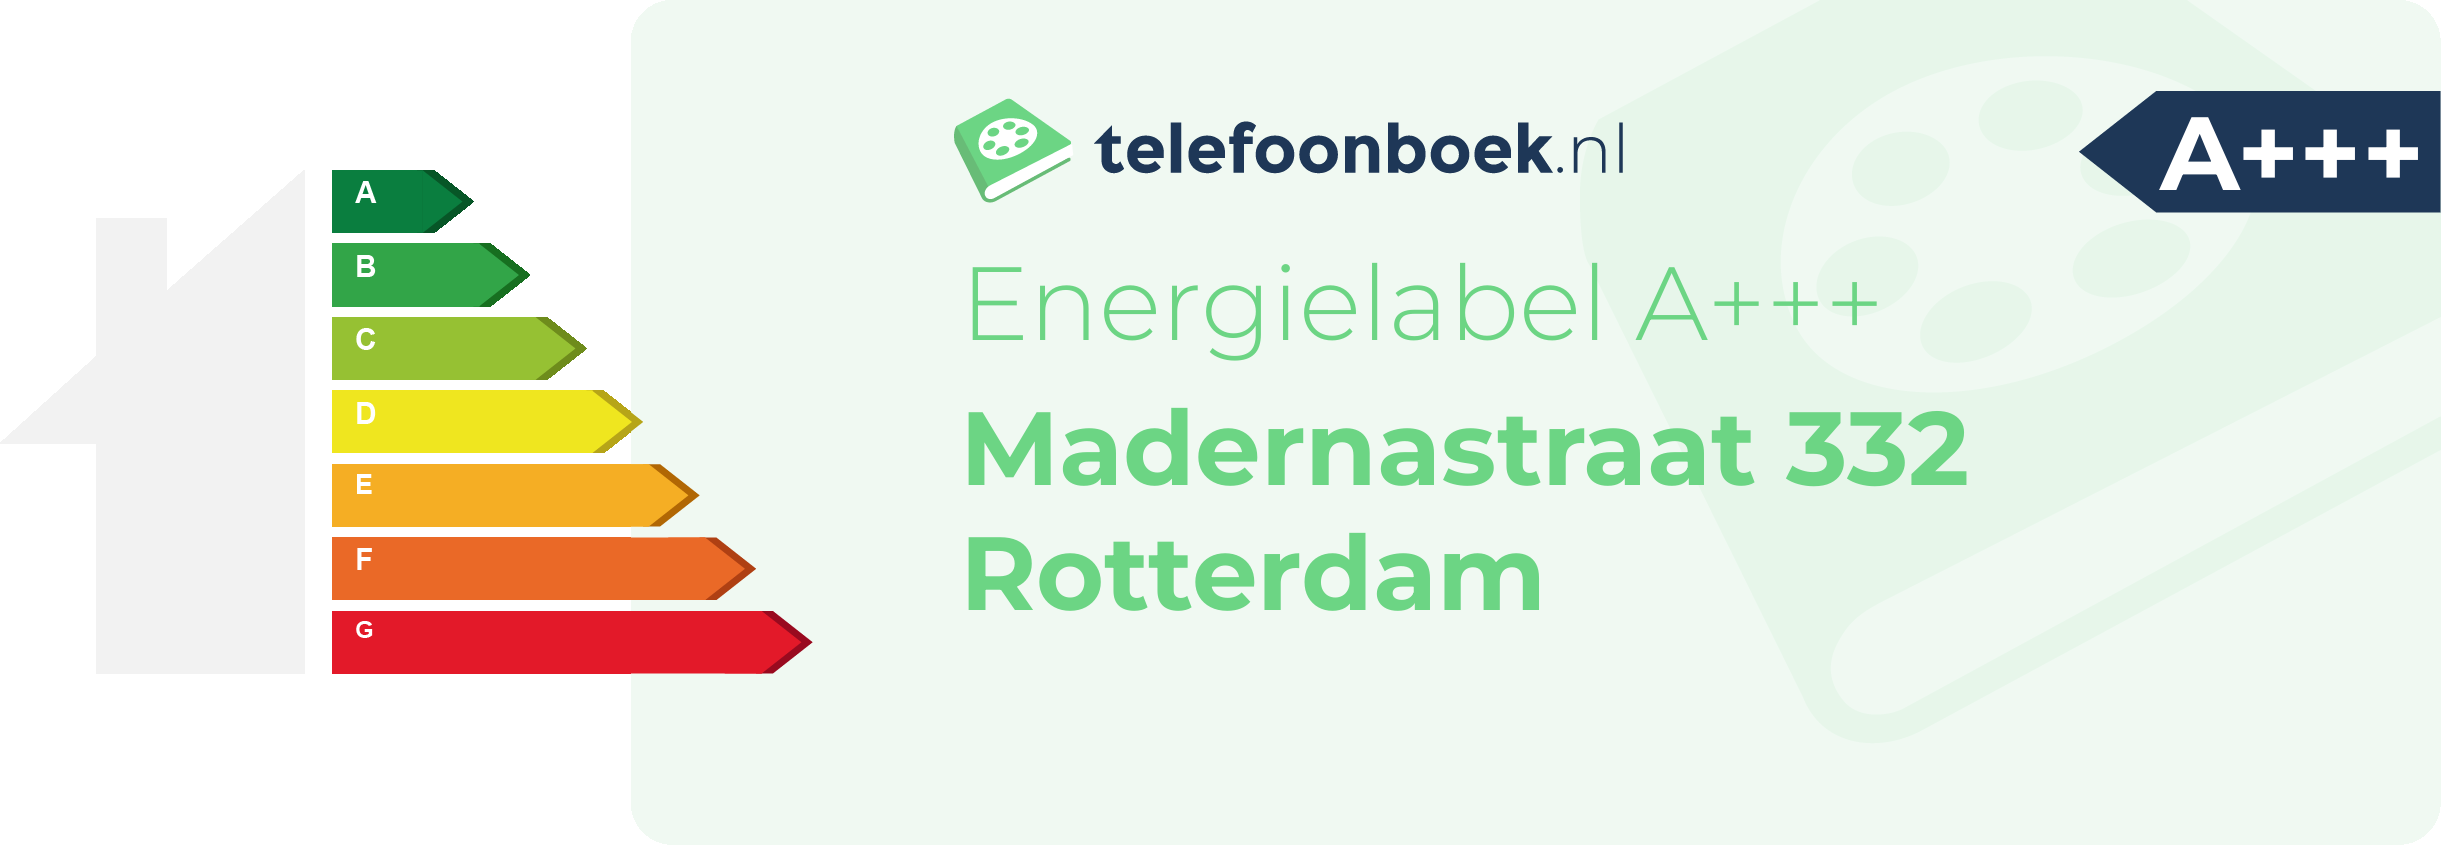 Energielabel Madernastraat 332 Rotterdam